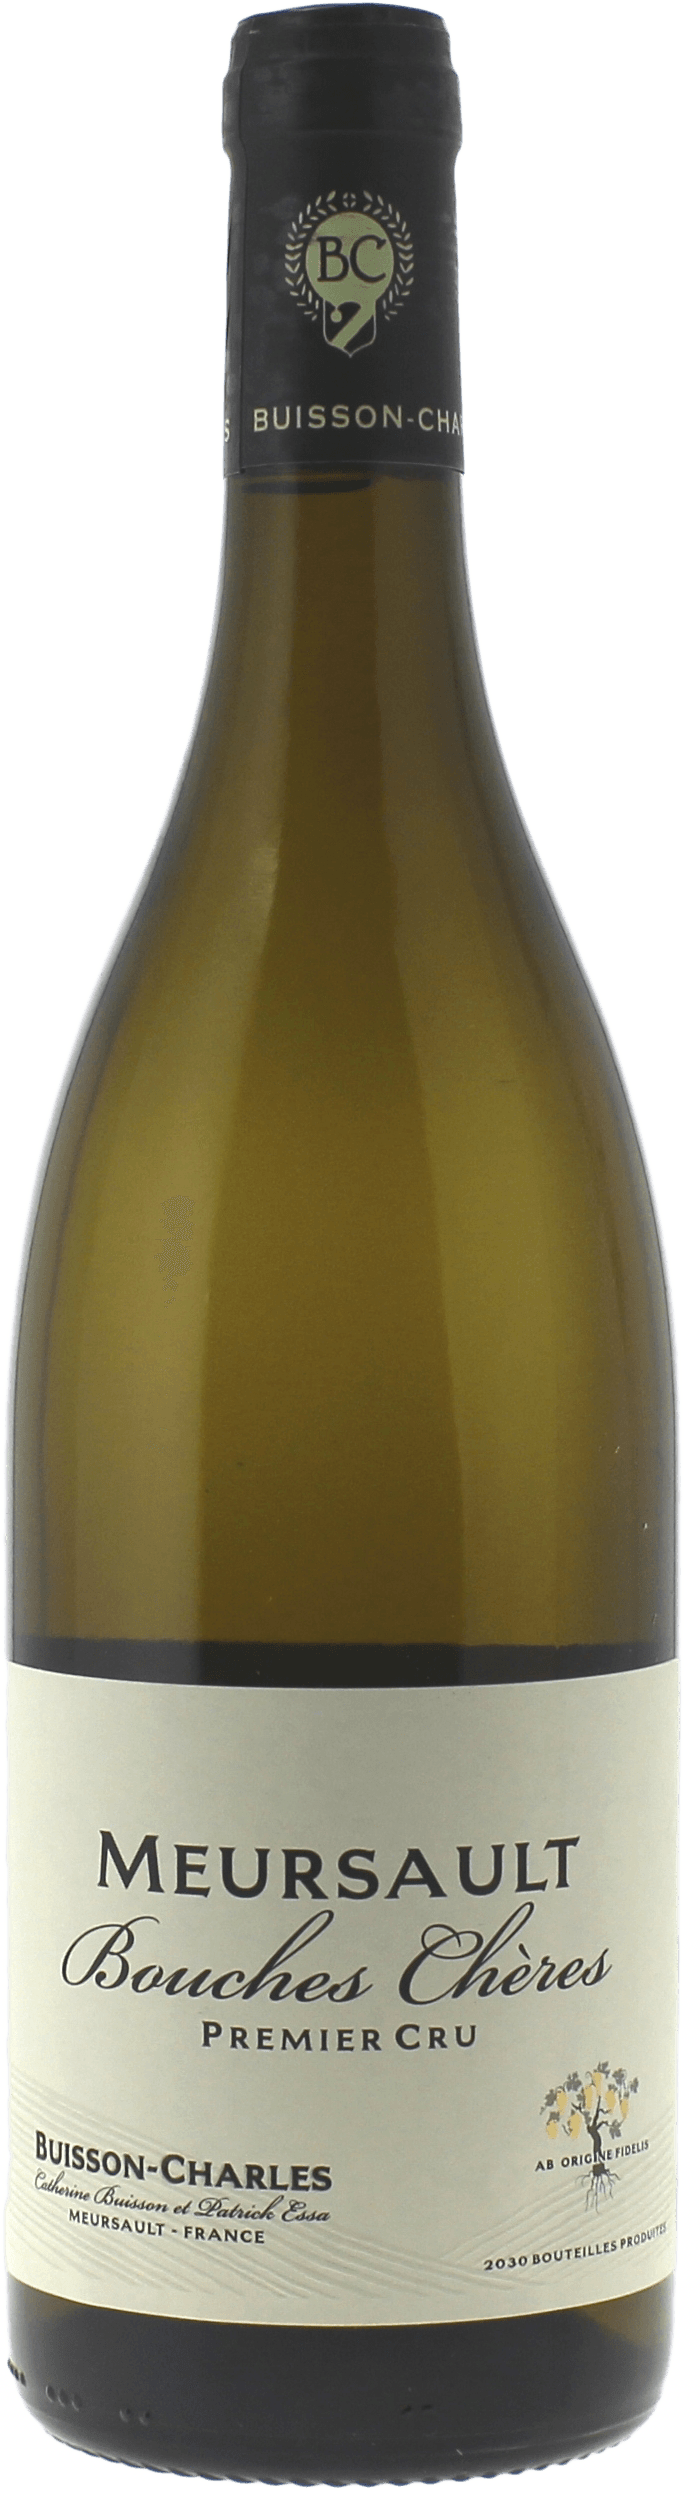 Meursault bouches-cheres 1er cru 2018  BUISSON Charles, Bourgogne blanc